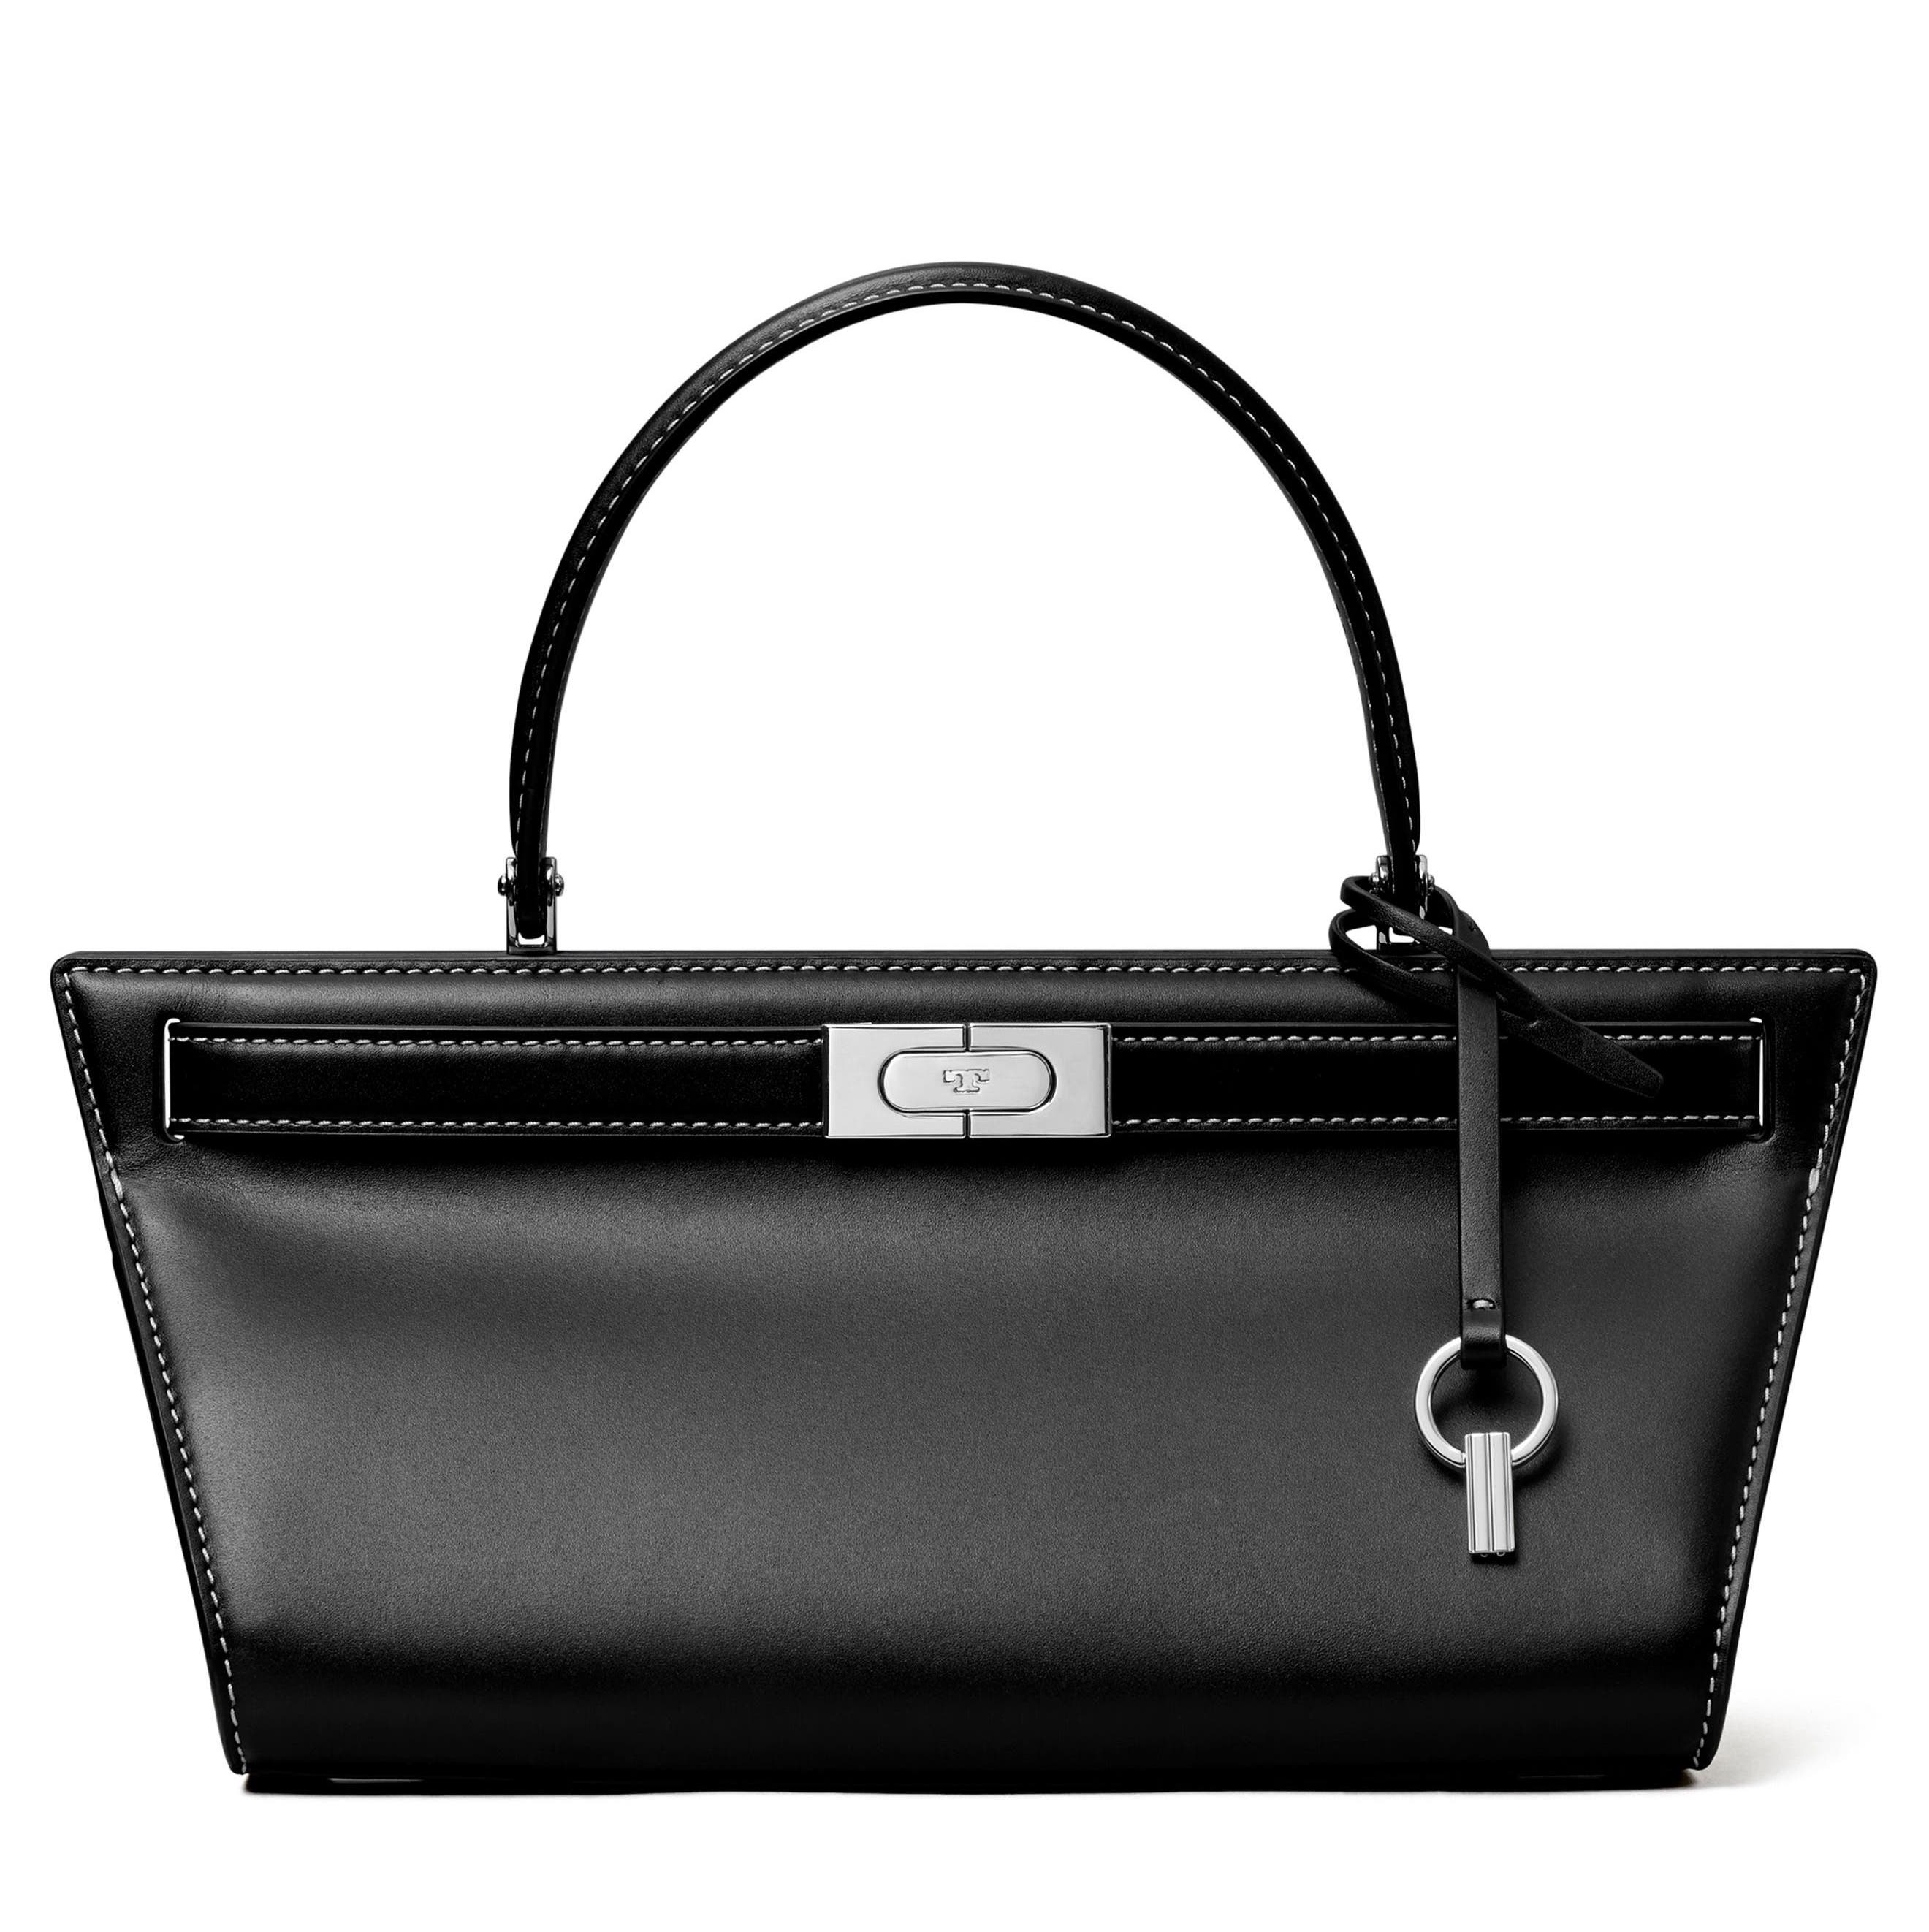 Our Favourite Designer Handbags Priced Under R15,000